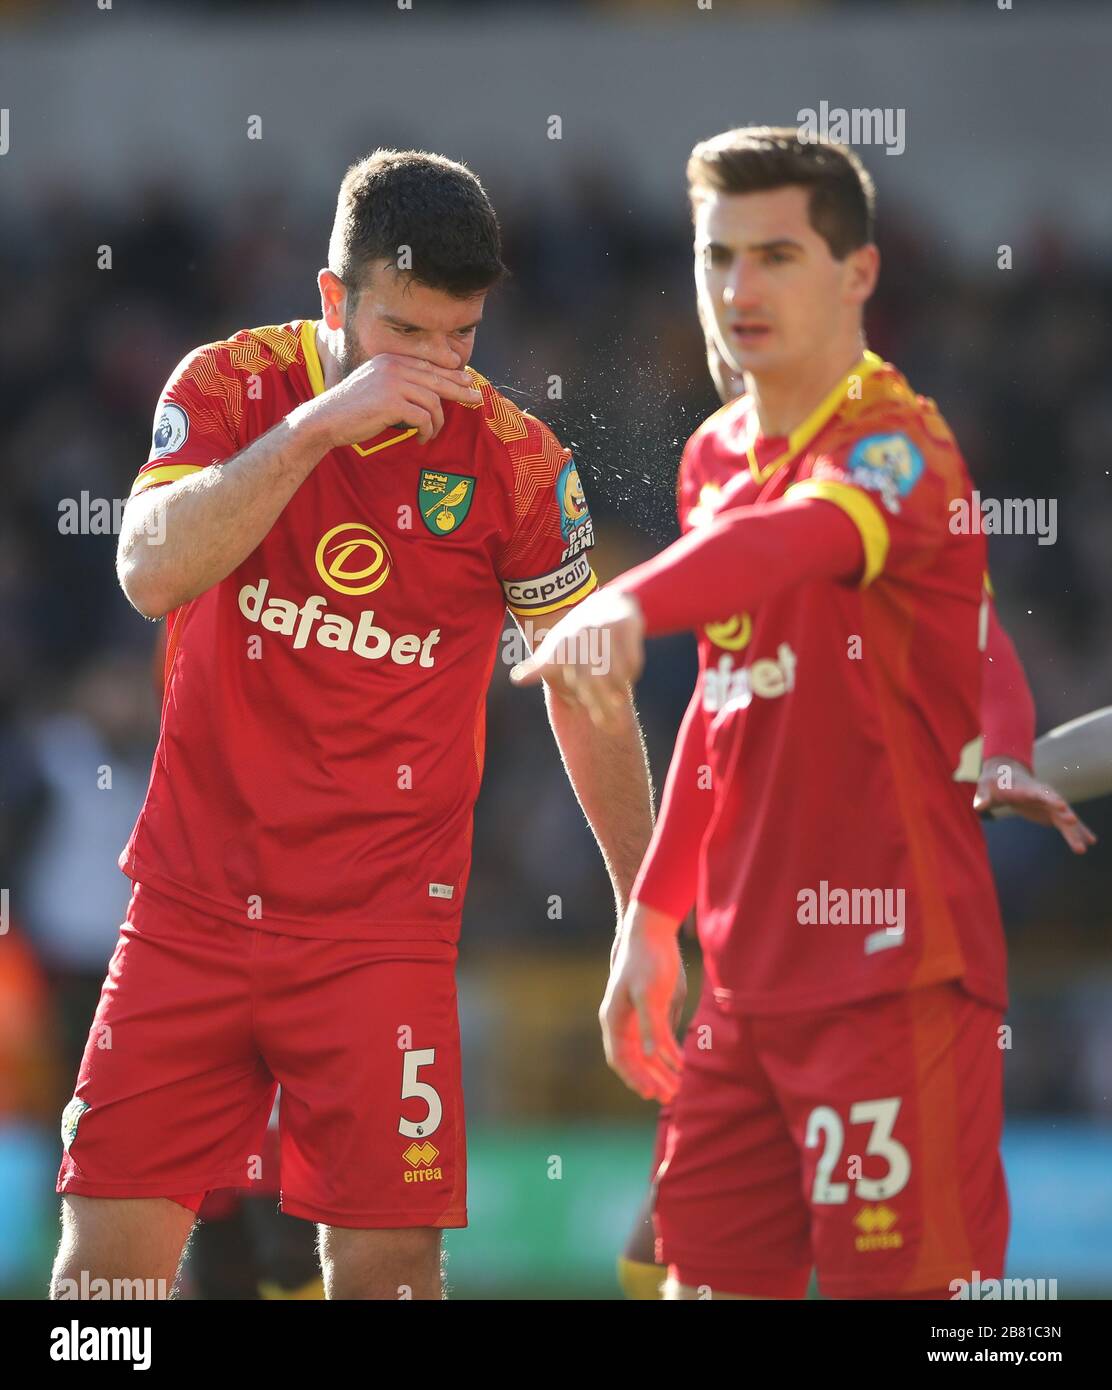 Norwich City's Grant Hanley blows his nose during the Premier League match at Molineux, Wolverhampton. Stock Photo